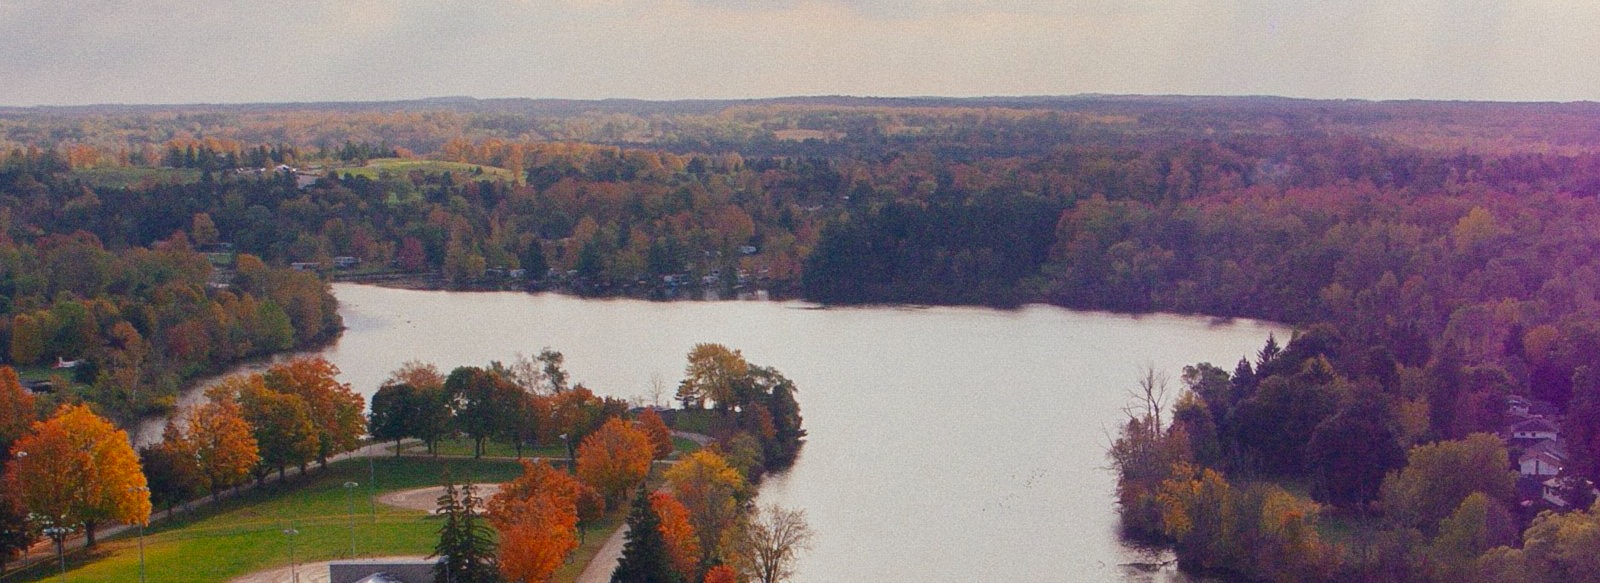 image of lake and fall foliage 